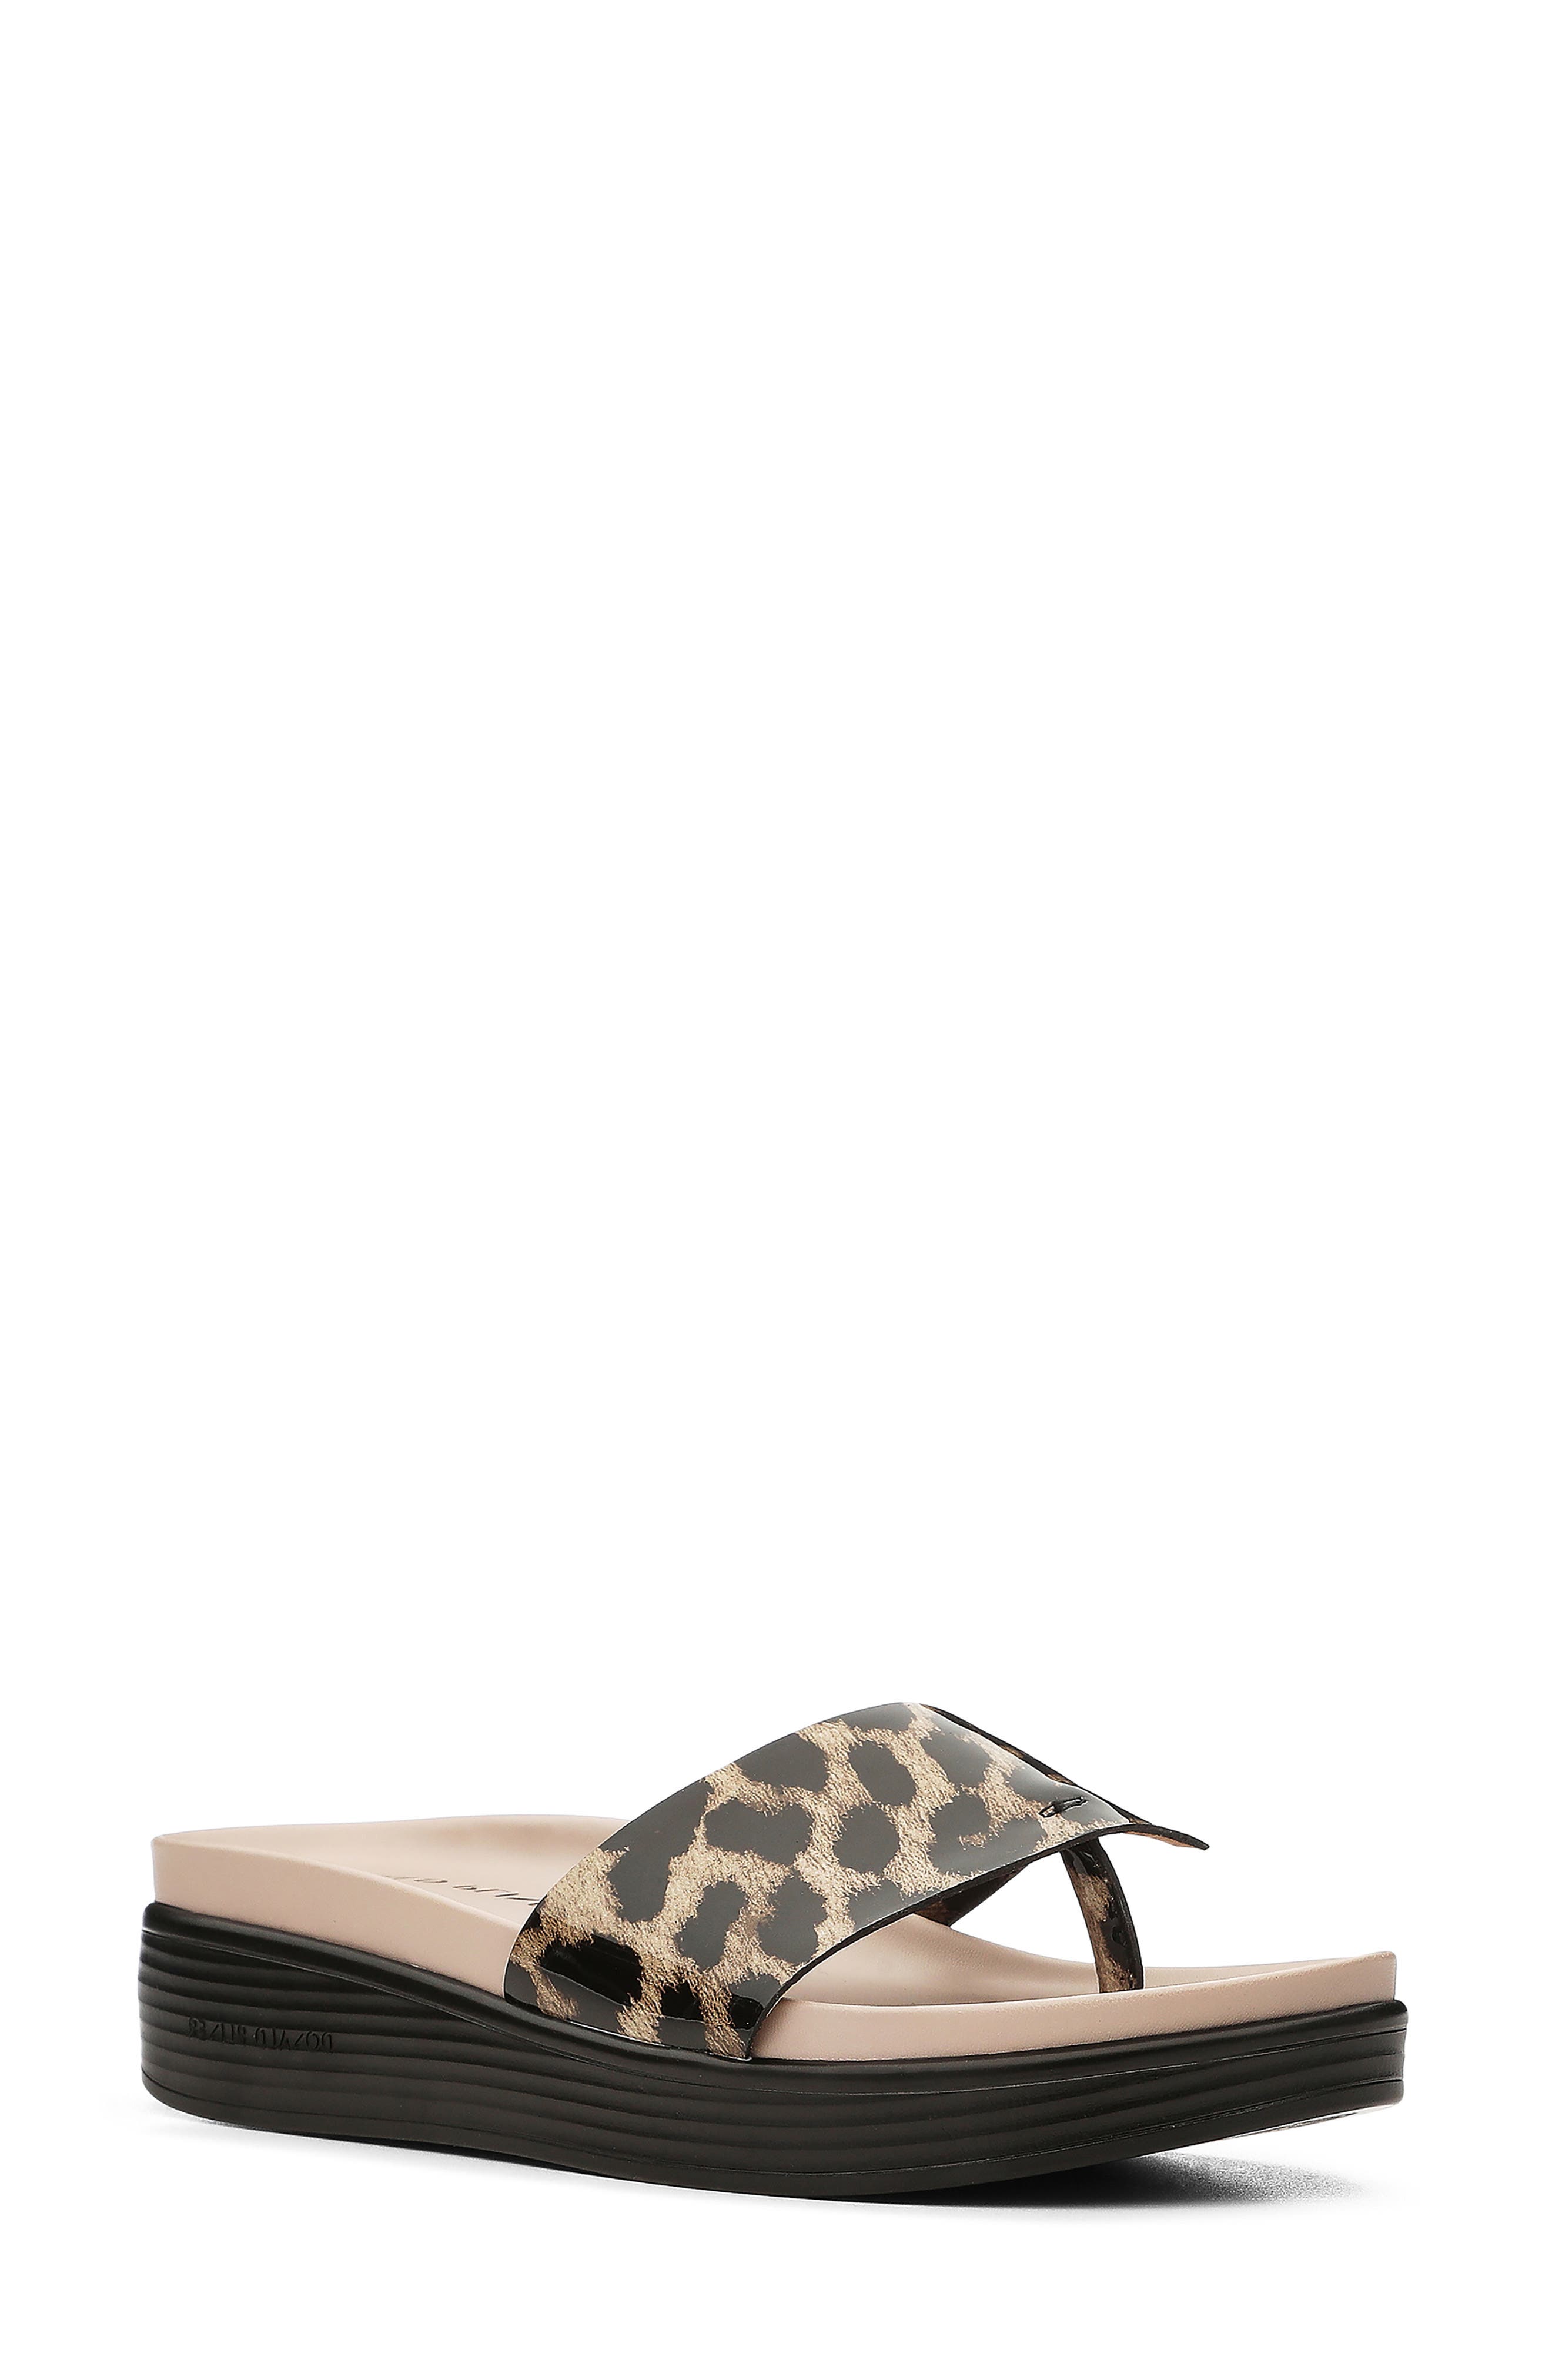 Willie Marlow Slippers Women Fashion Flip Flops Platform High Heel Wedges Slides Outside Shoes Pink 7.5 